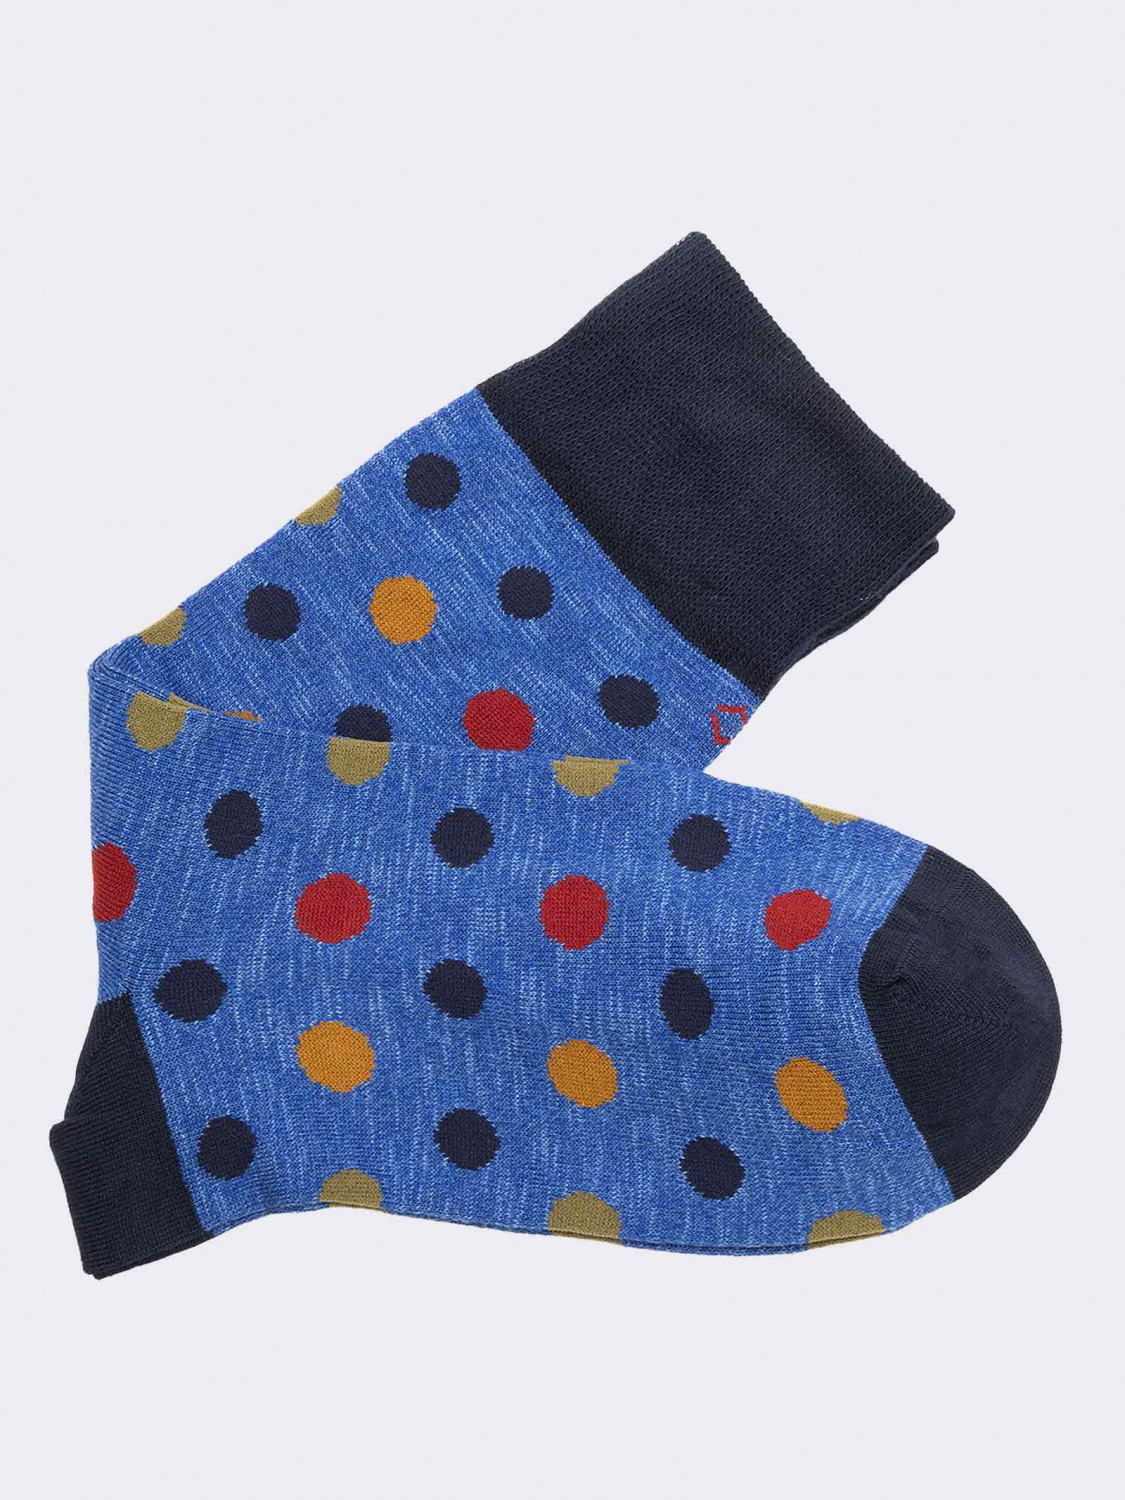 Men's crew polka dot patterned socks in warm cotton